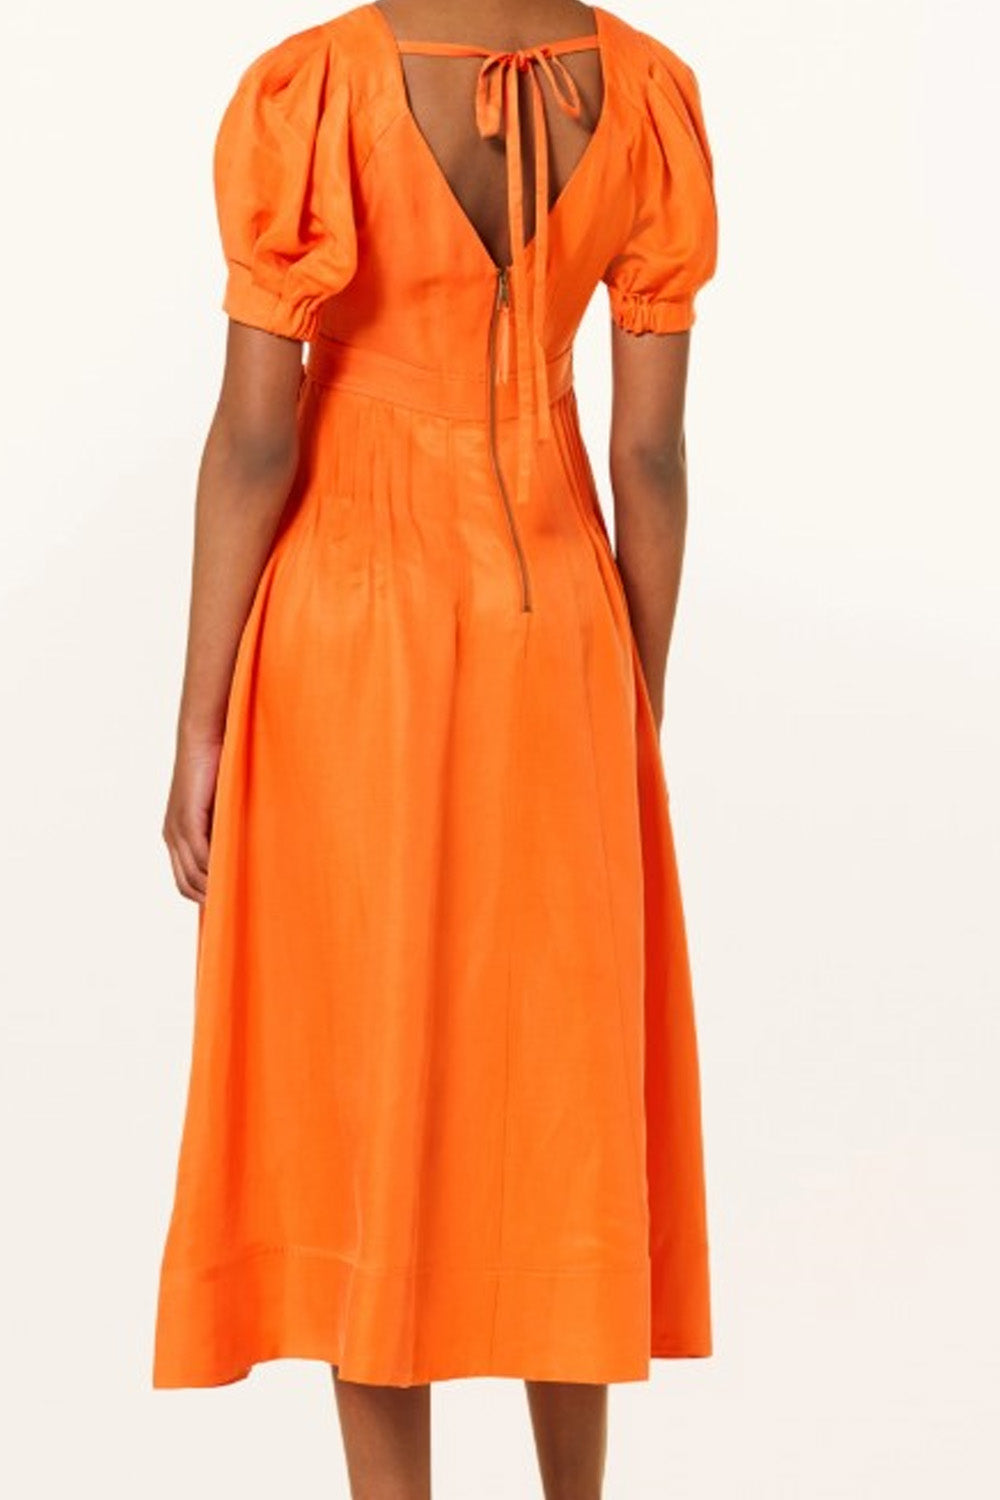 Verdure Orange Dress